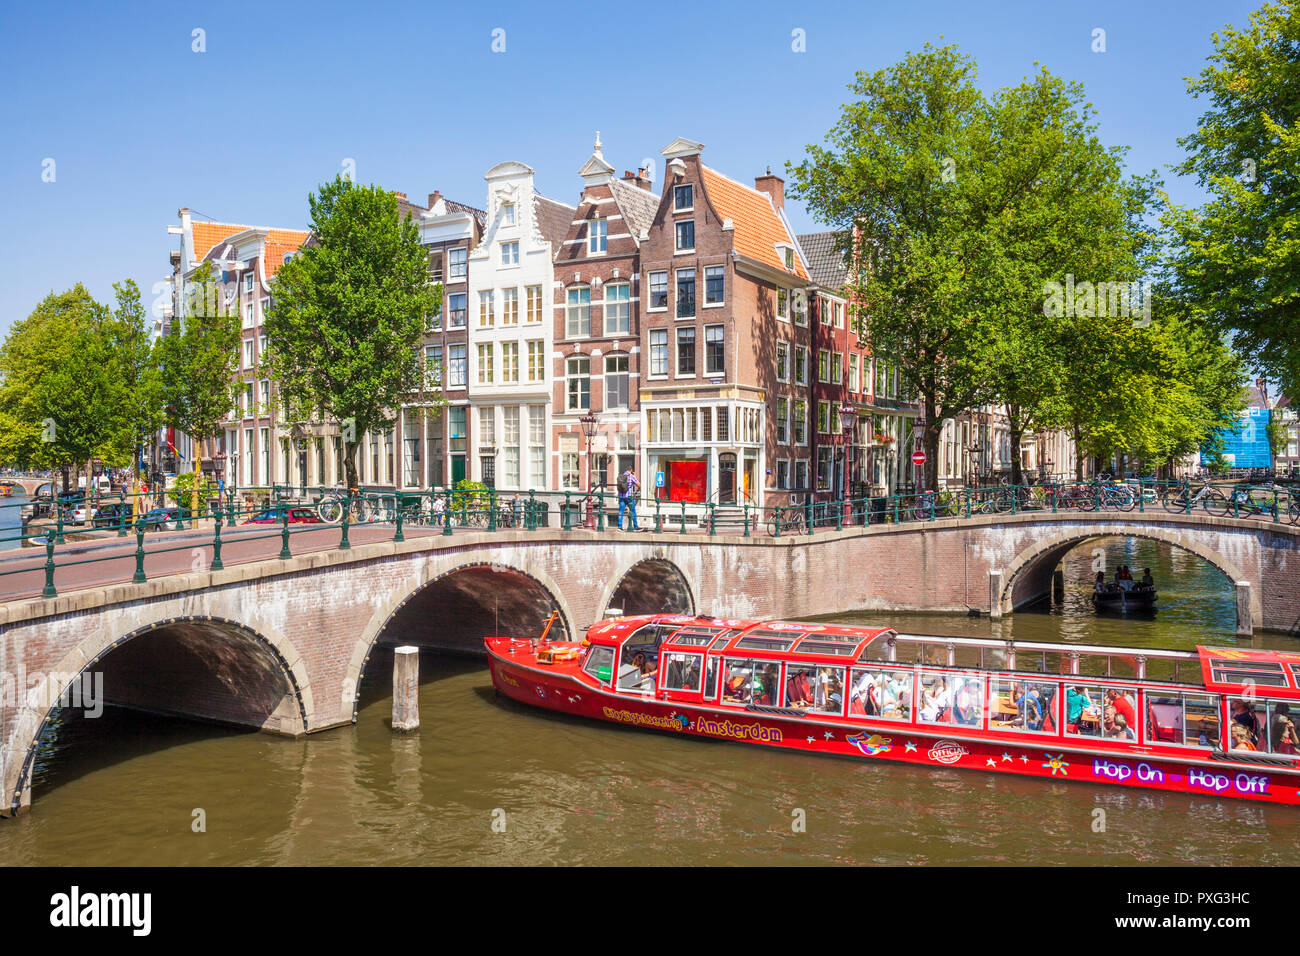 Amsterdam Canal Boot unter den Brücken von Keizergraht Kanal an der Kreuzung mit der leidsegracht Kanal Amsterdam Niederlande Holland EU Europa Stockfoto